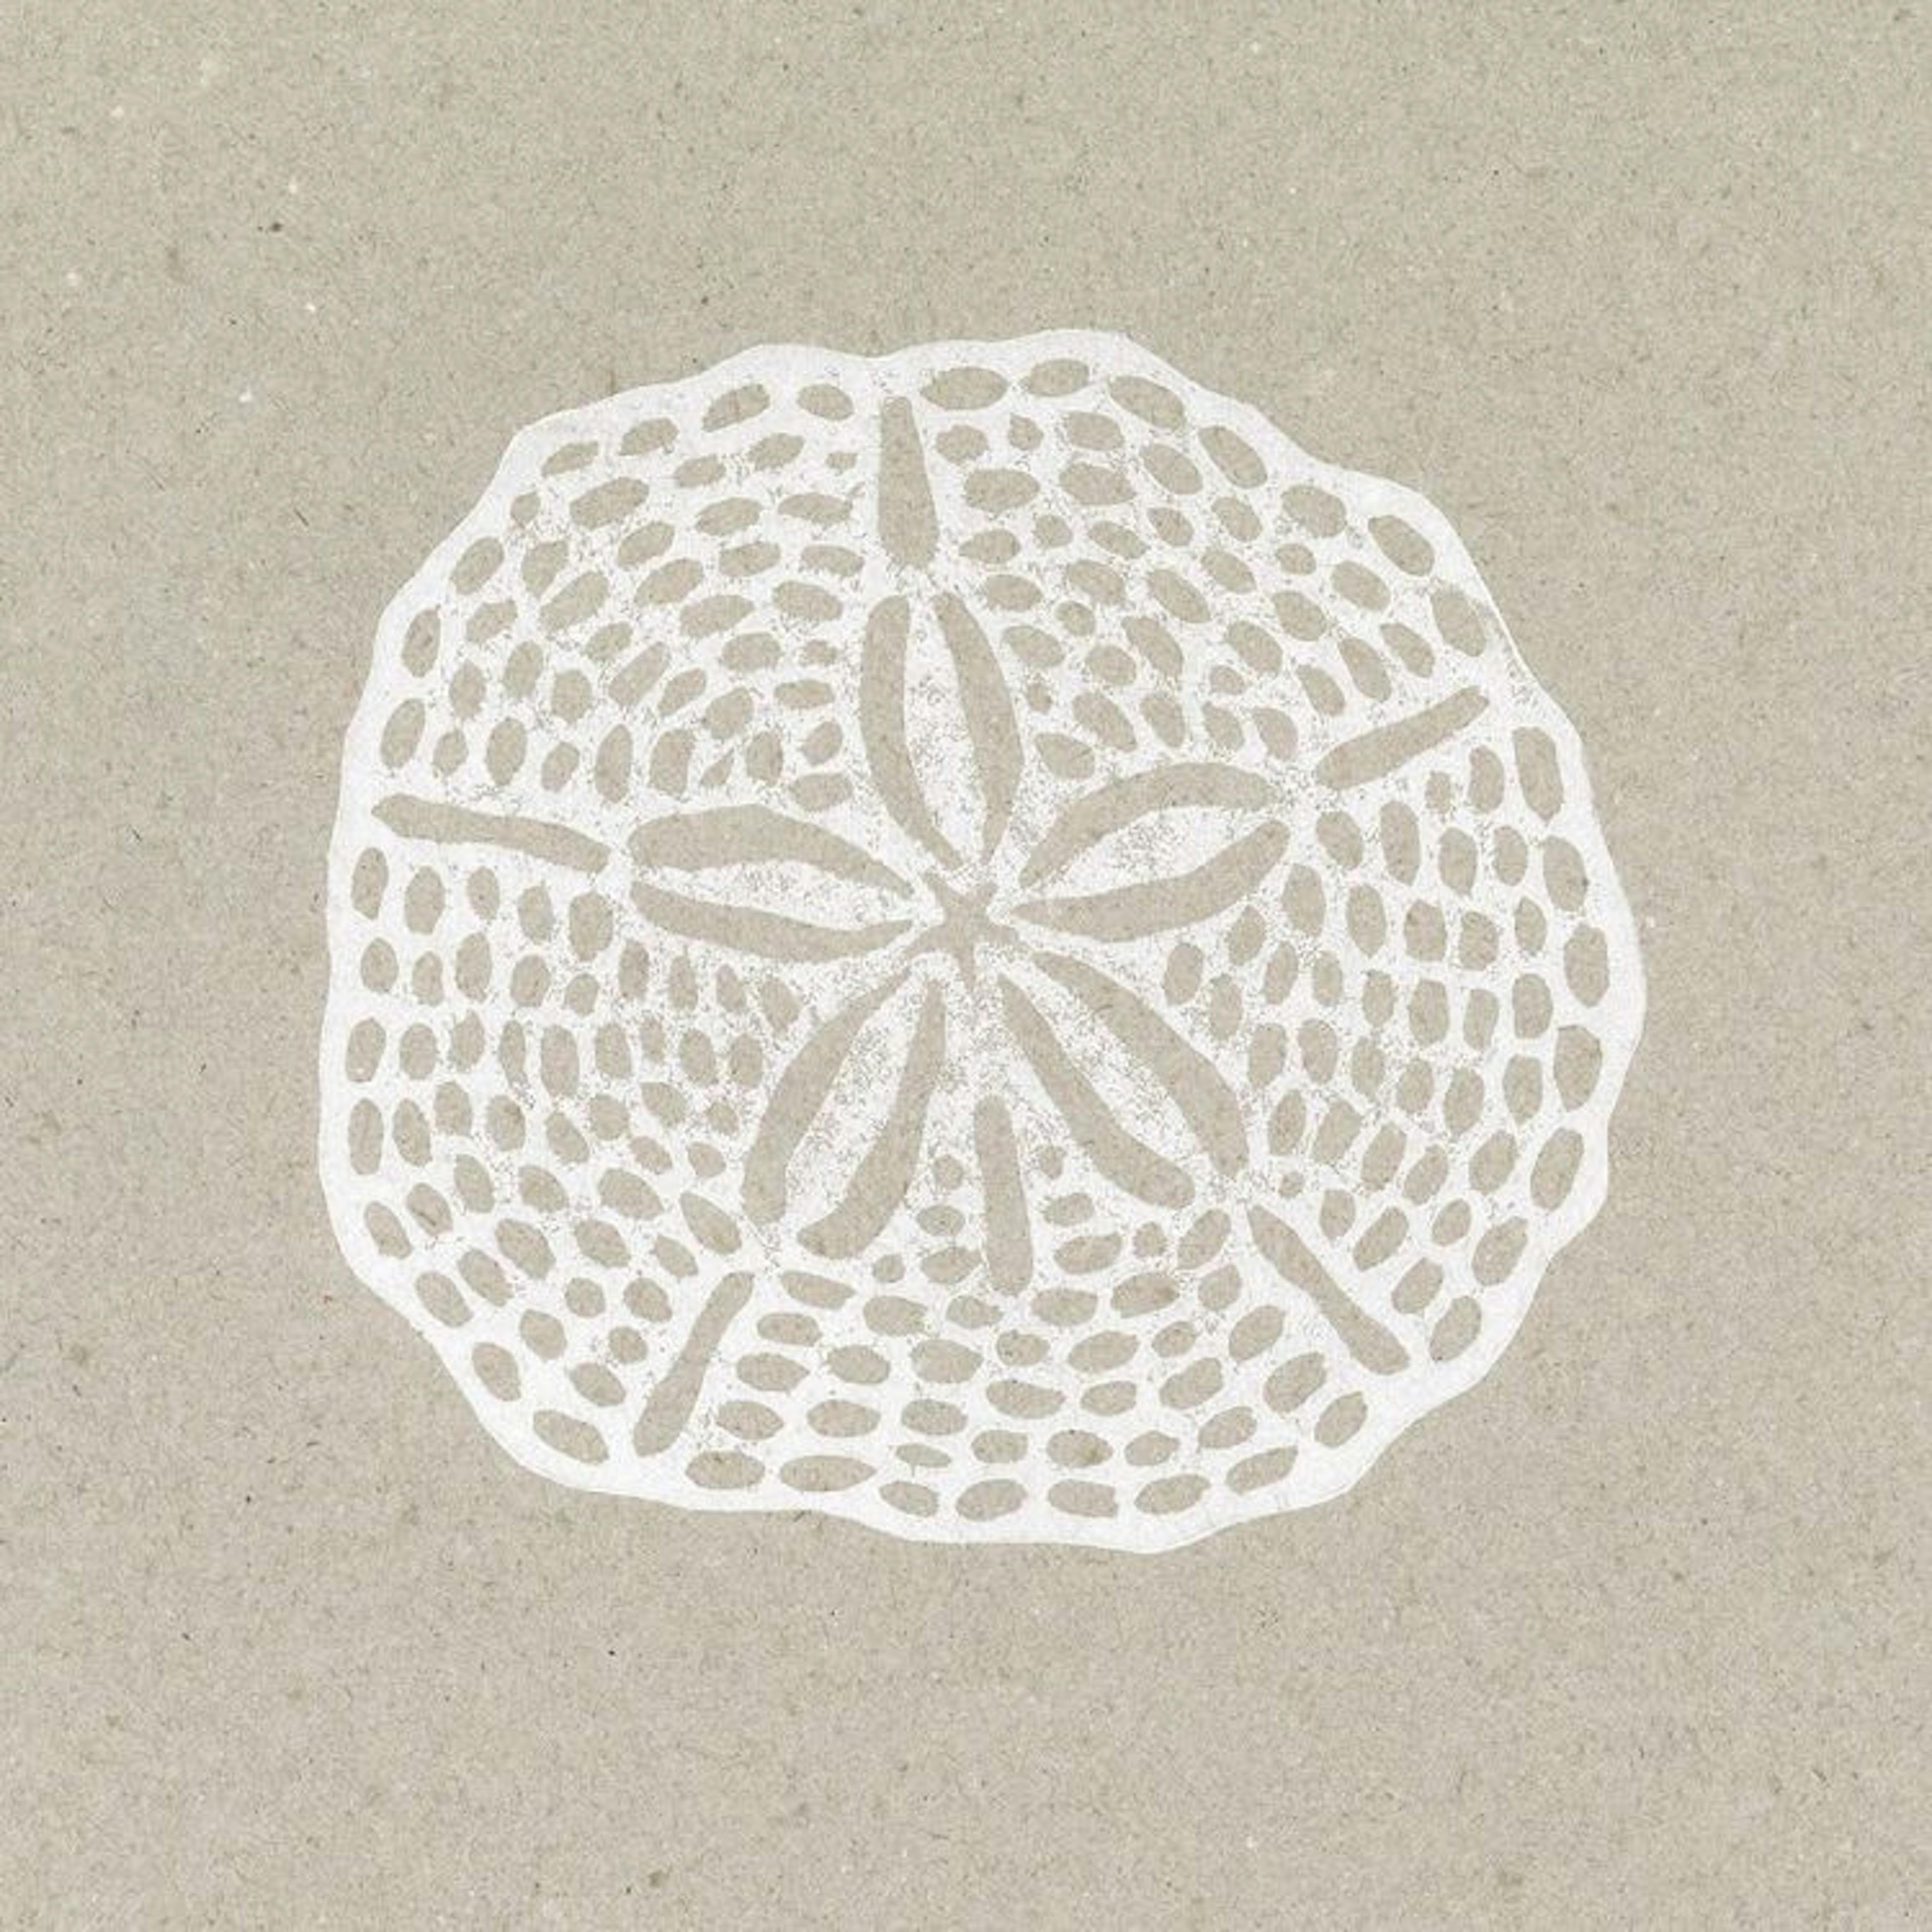 Linocut Sand Dollar Print